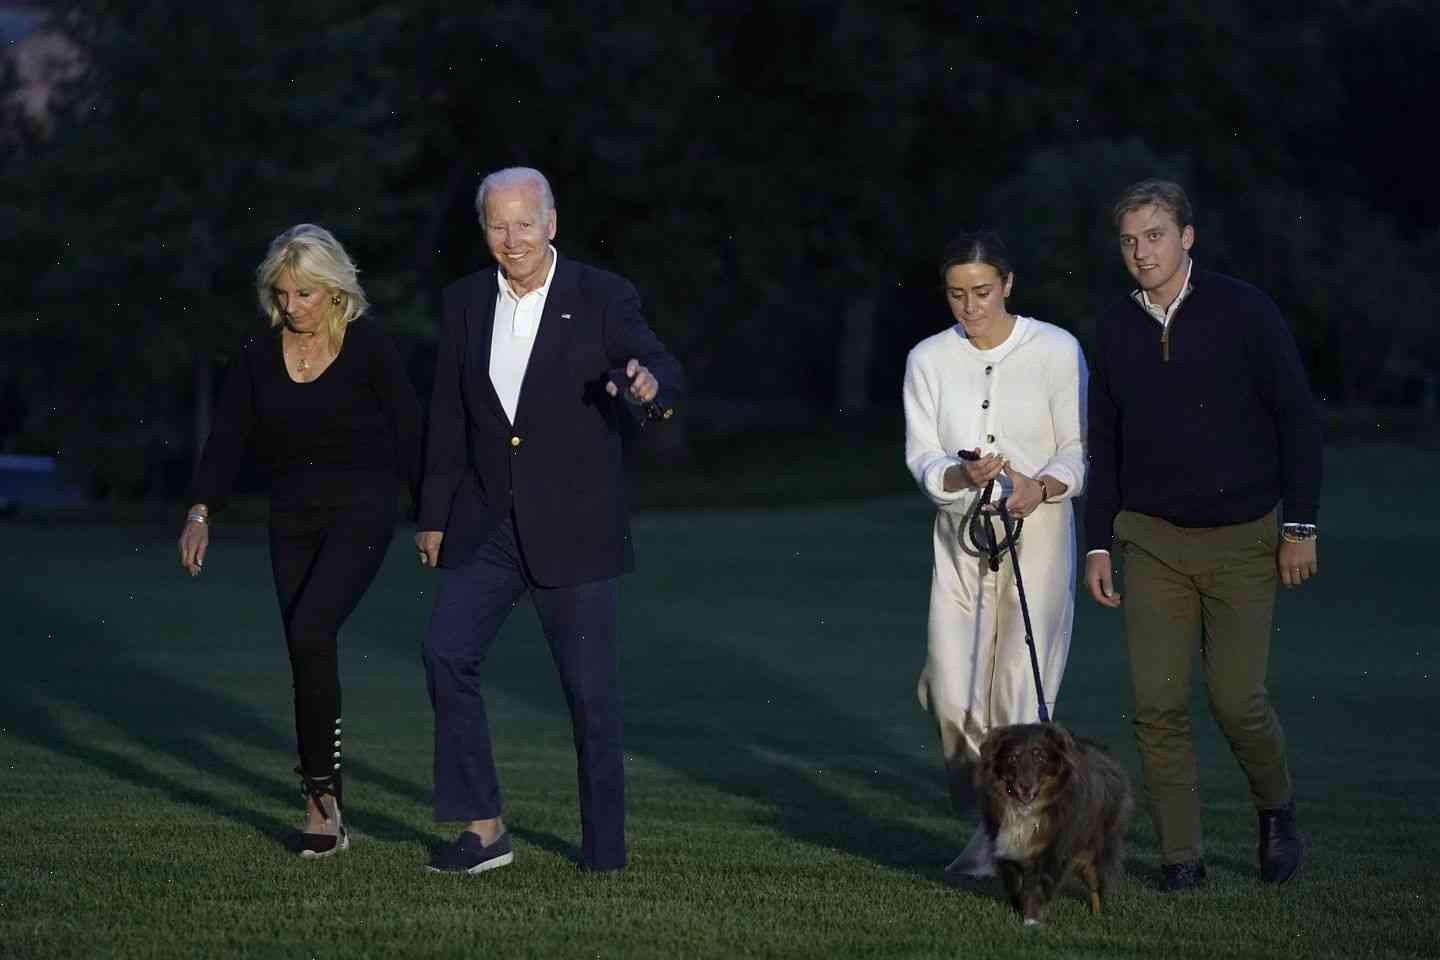 Joe Biden defends his remarks about his granddaughter's wedding